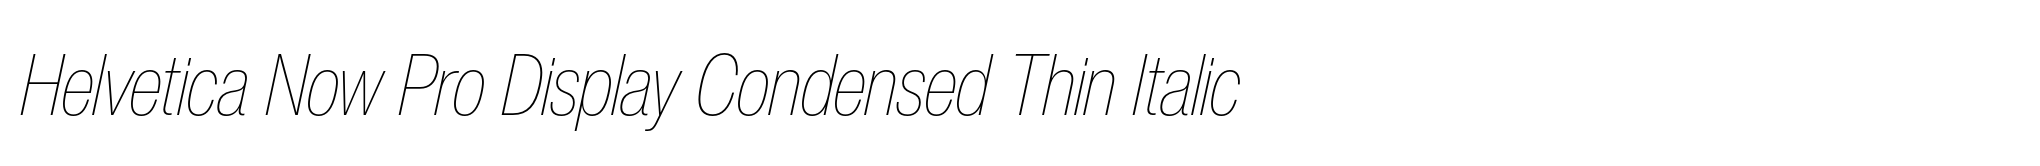 Helvetica Now Pro Display Condensed Thin Italic image